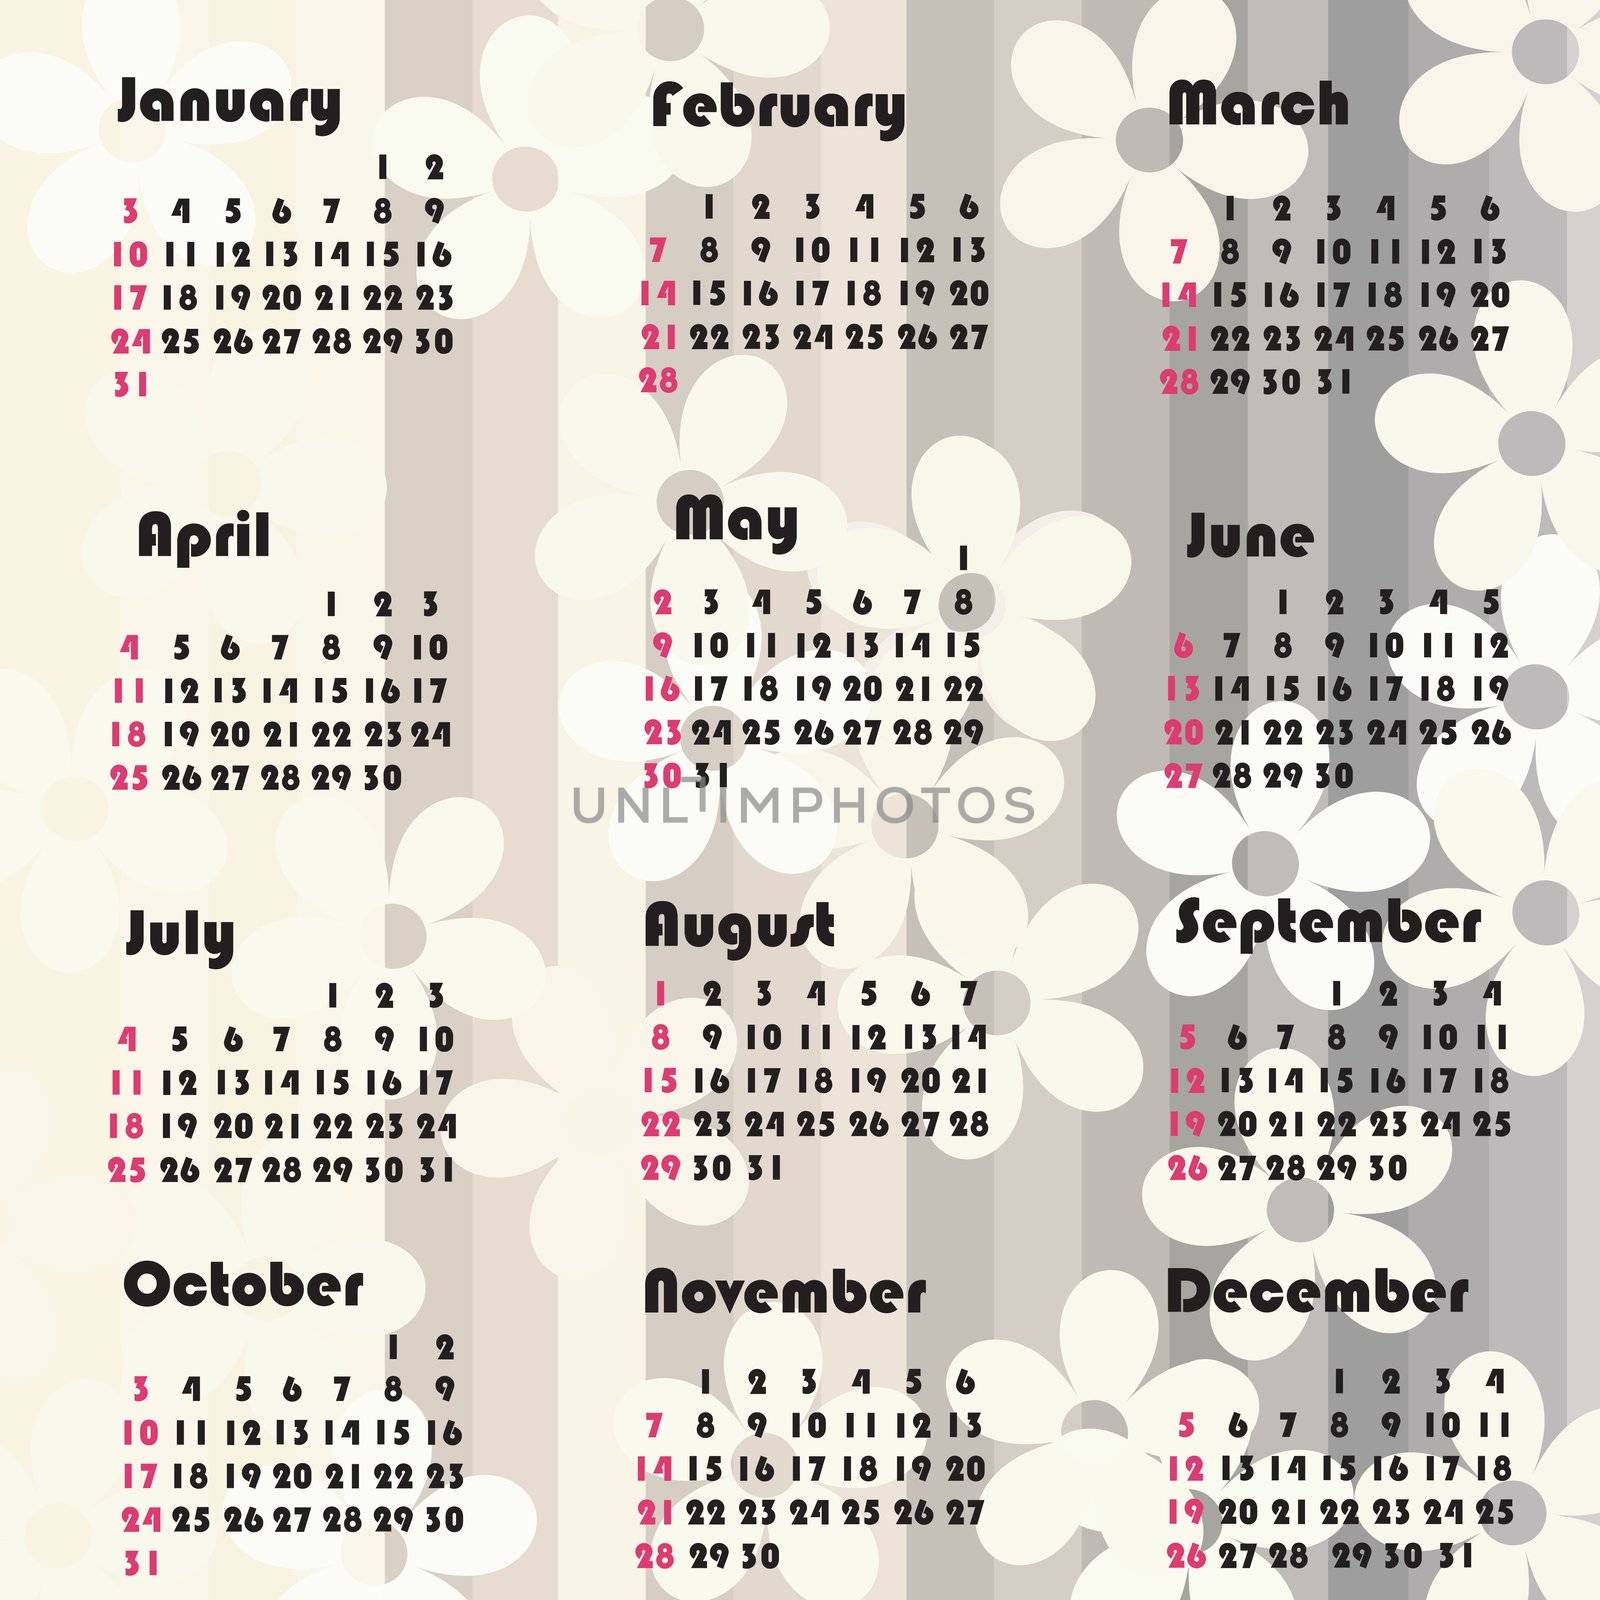 2010 Floral calendar by Lirch